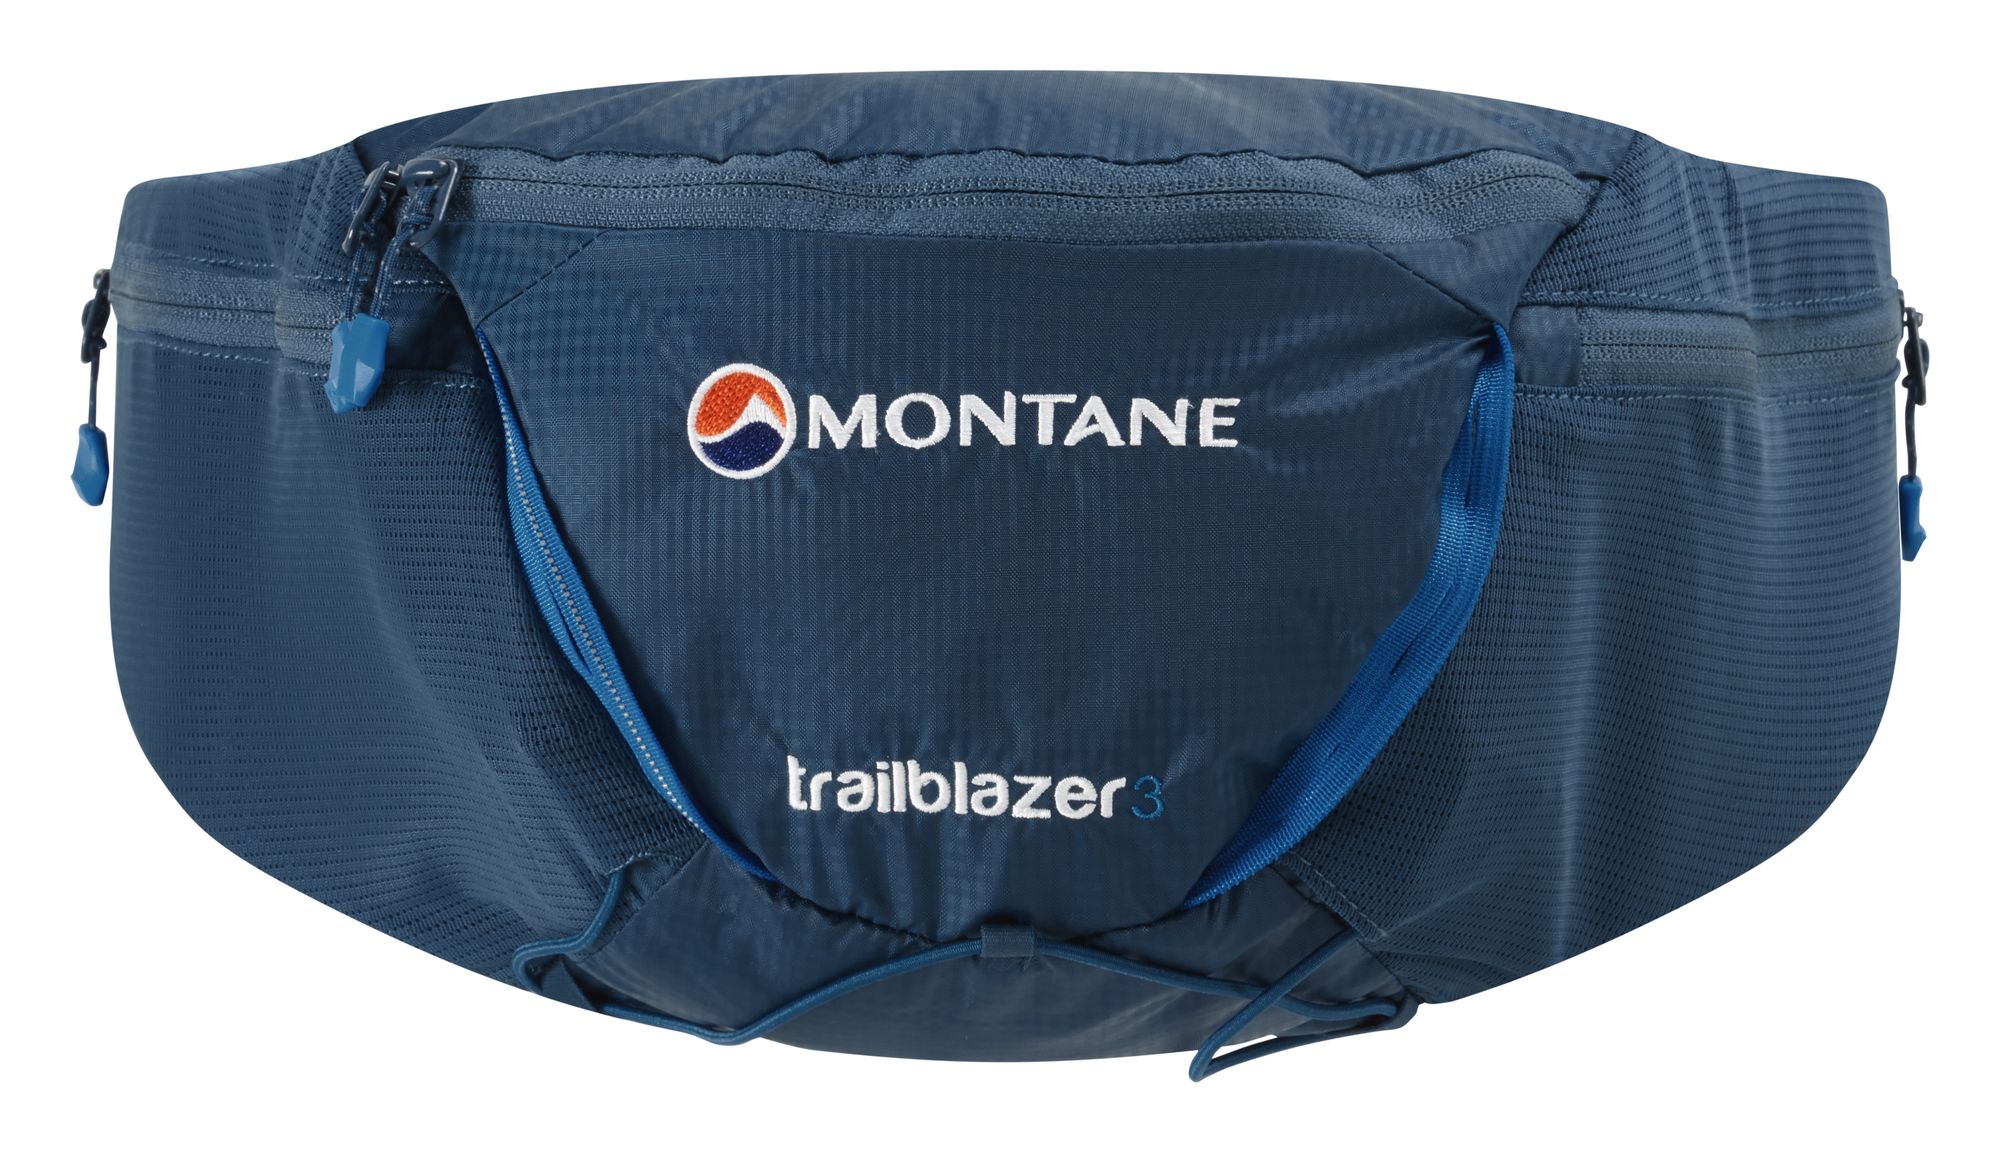 Montane TRAILBLAZER 3-NARWHAL BLUE-ONE SIZE batoh modrý